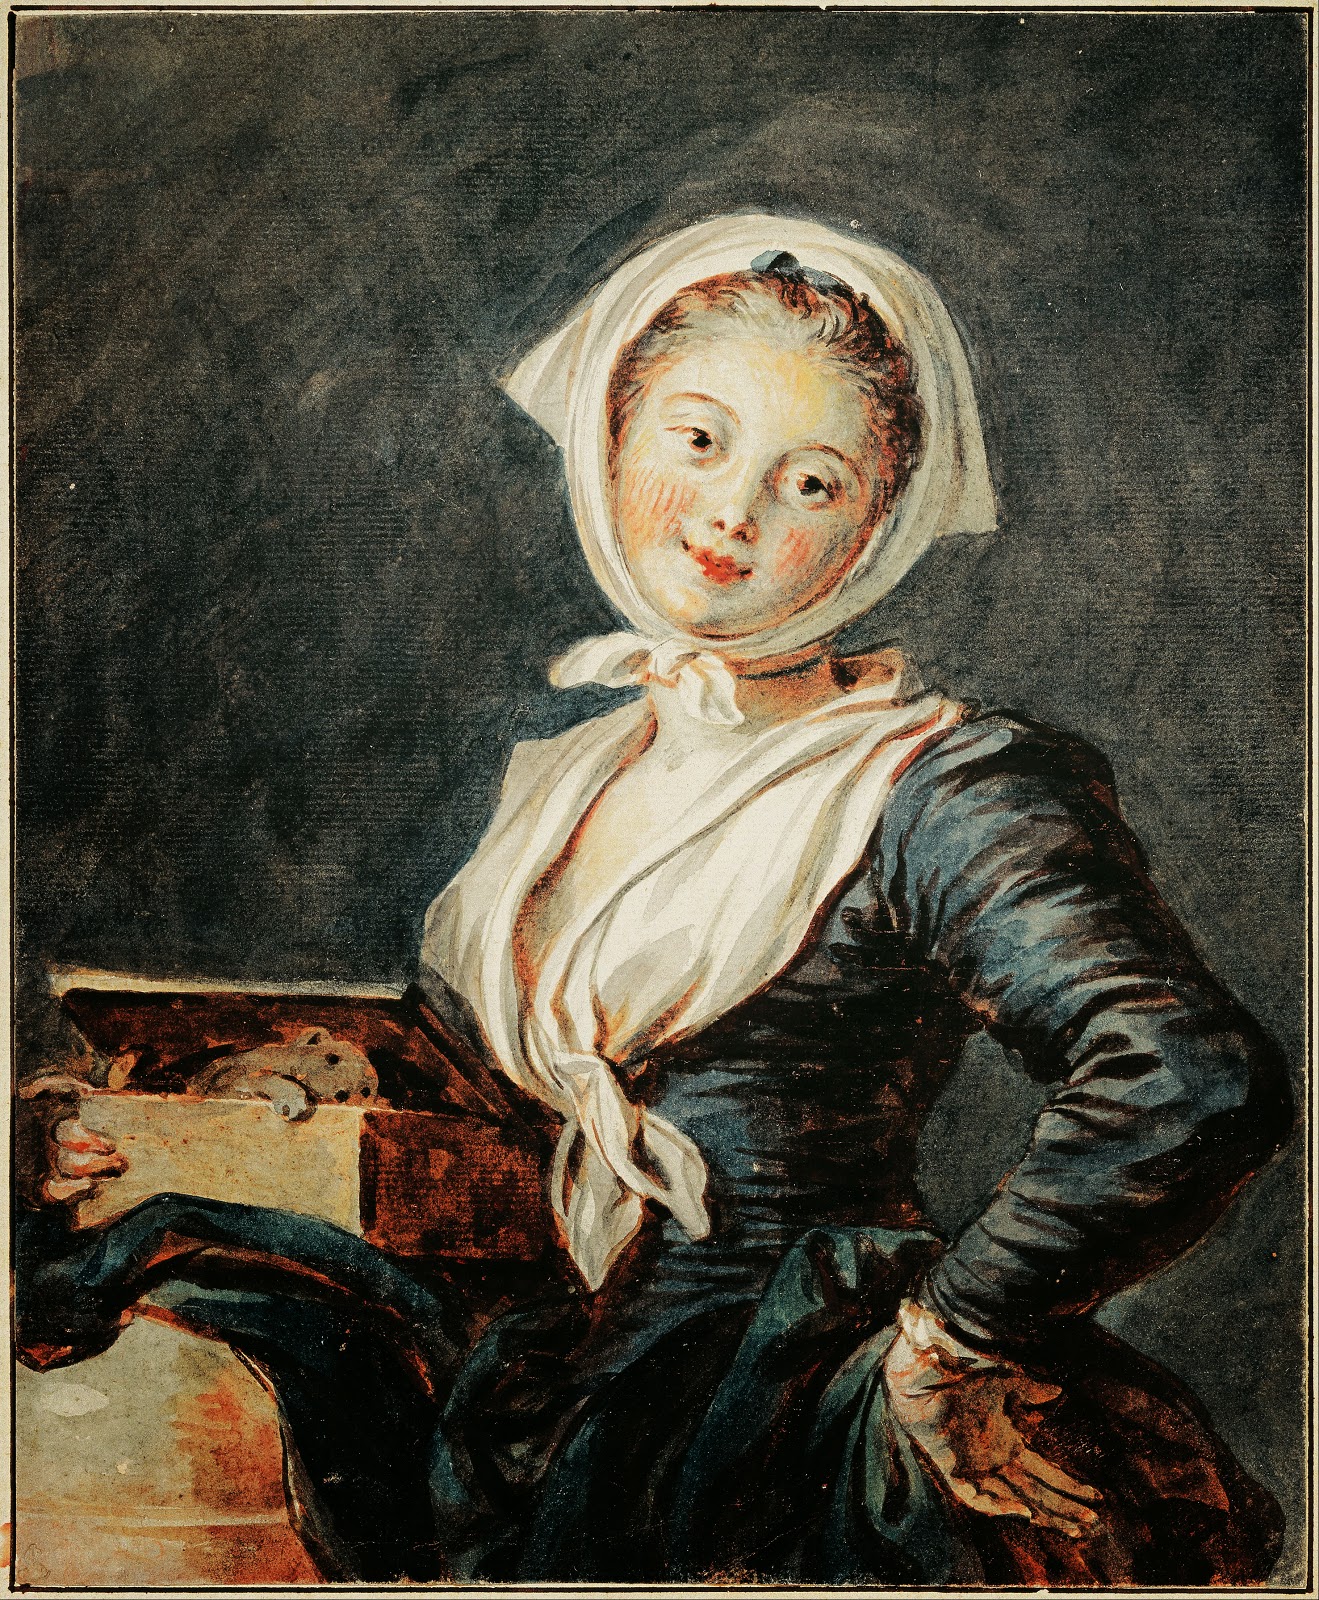 Jean+Honore+Fragonard-1732-1806 (129).jpg